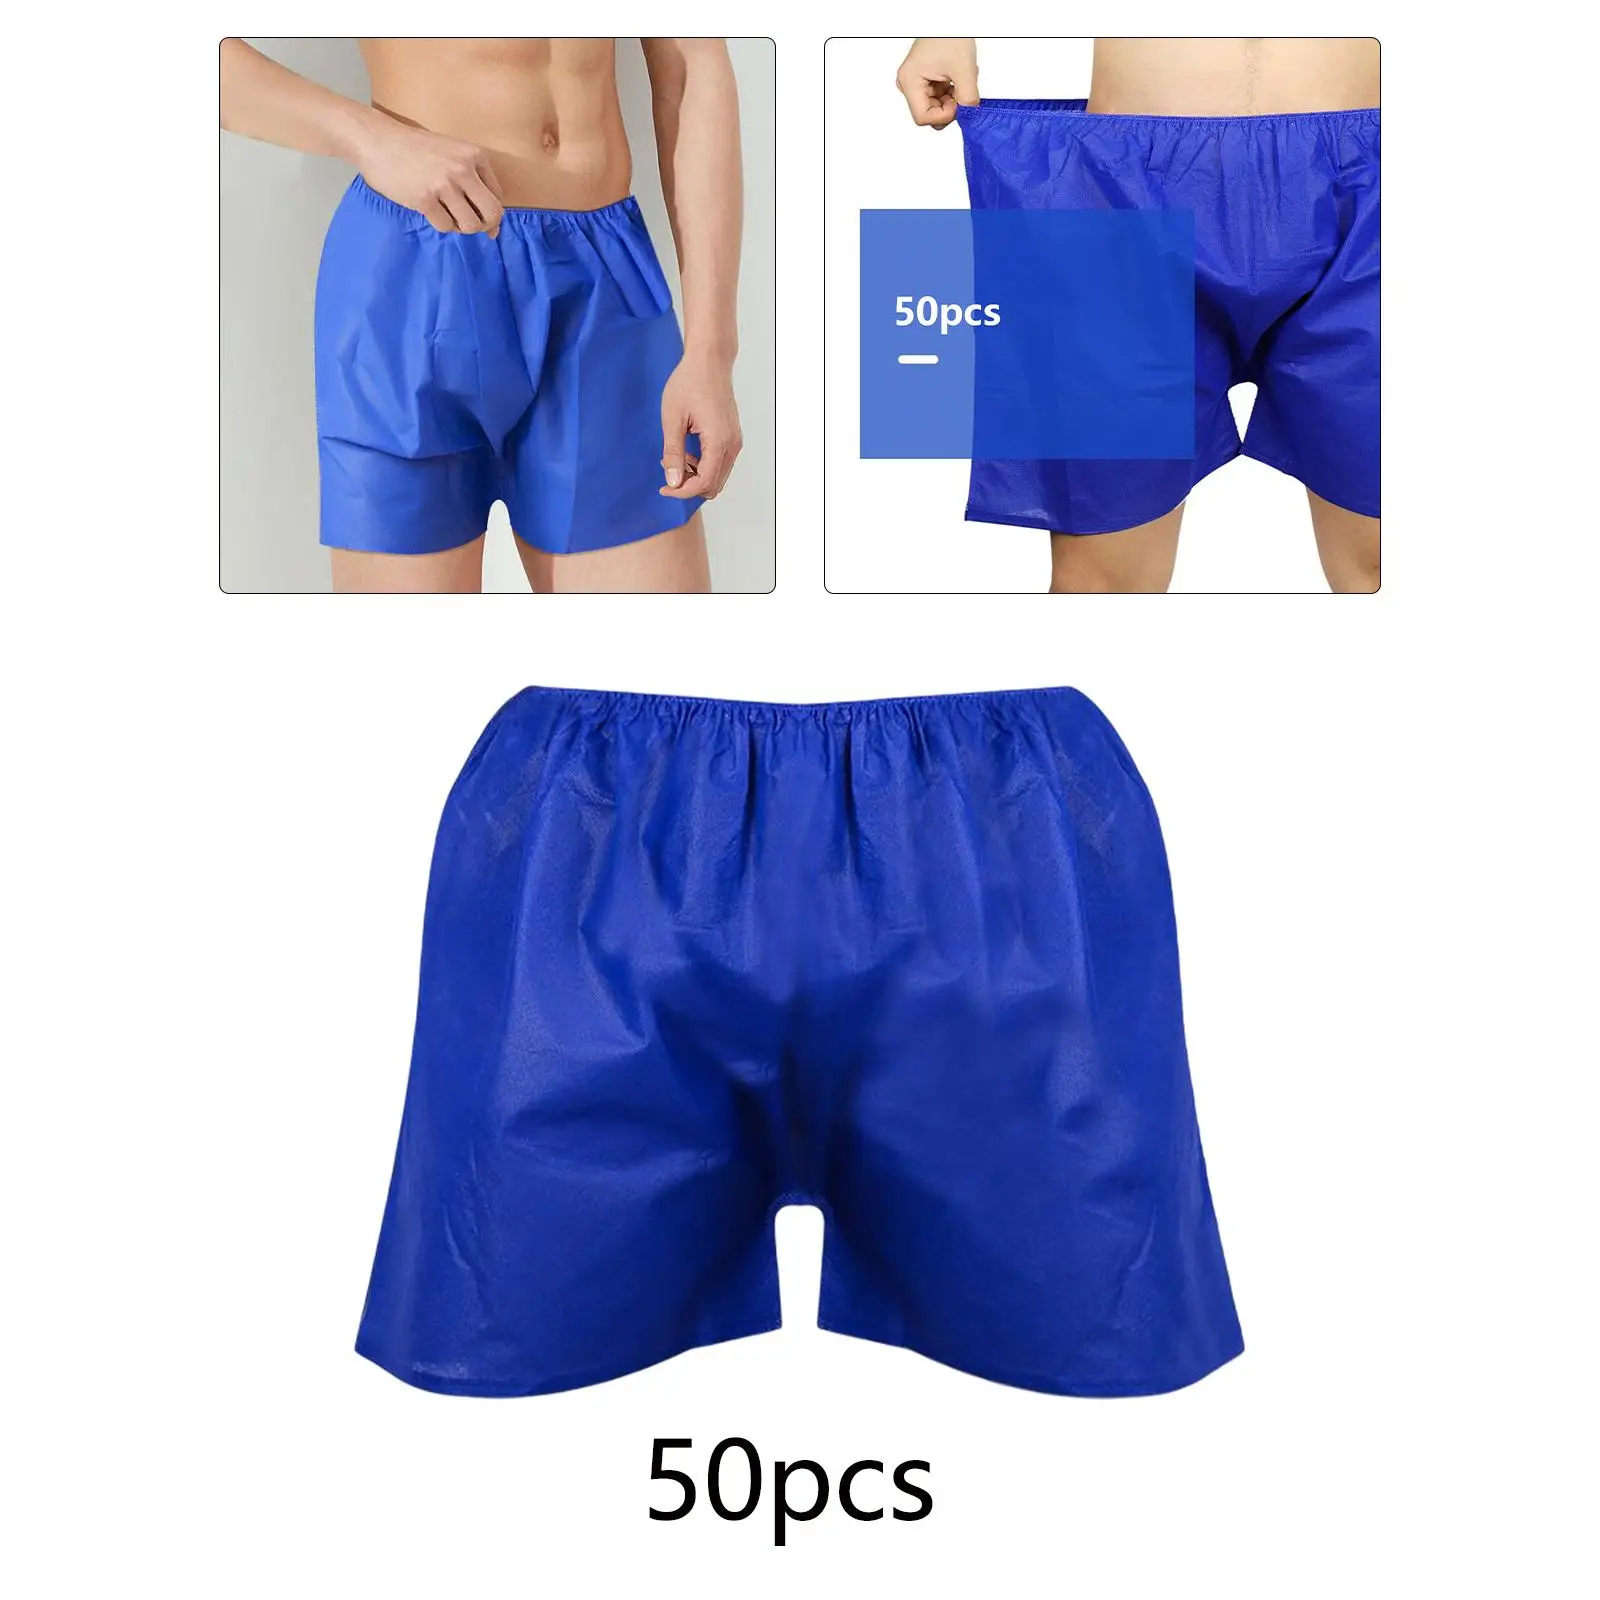 Men`s men Shorts Panties Underwear for Travel Tanning Steaming